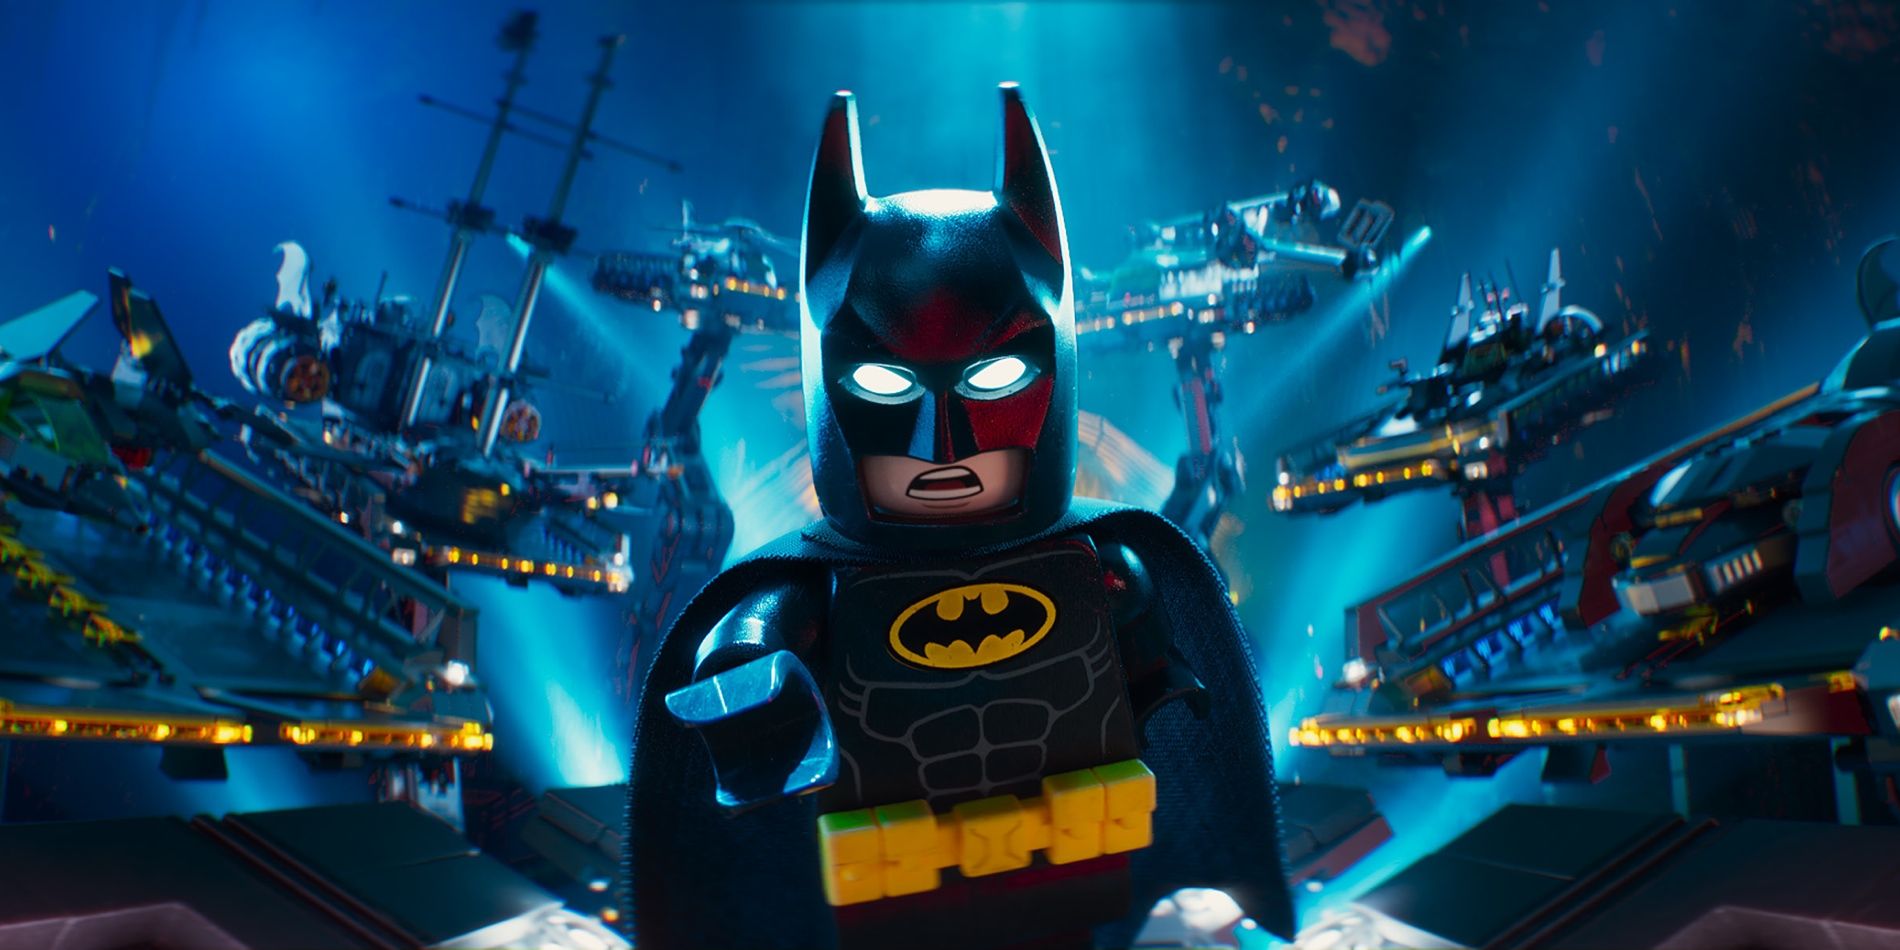 LEGO Batman Movie Vehicles image featured